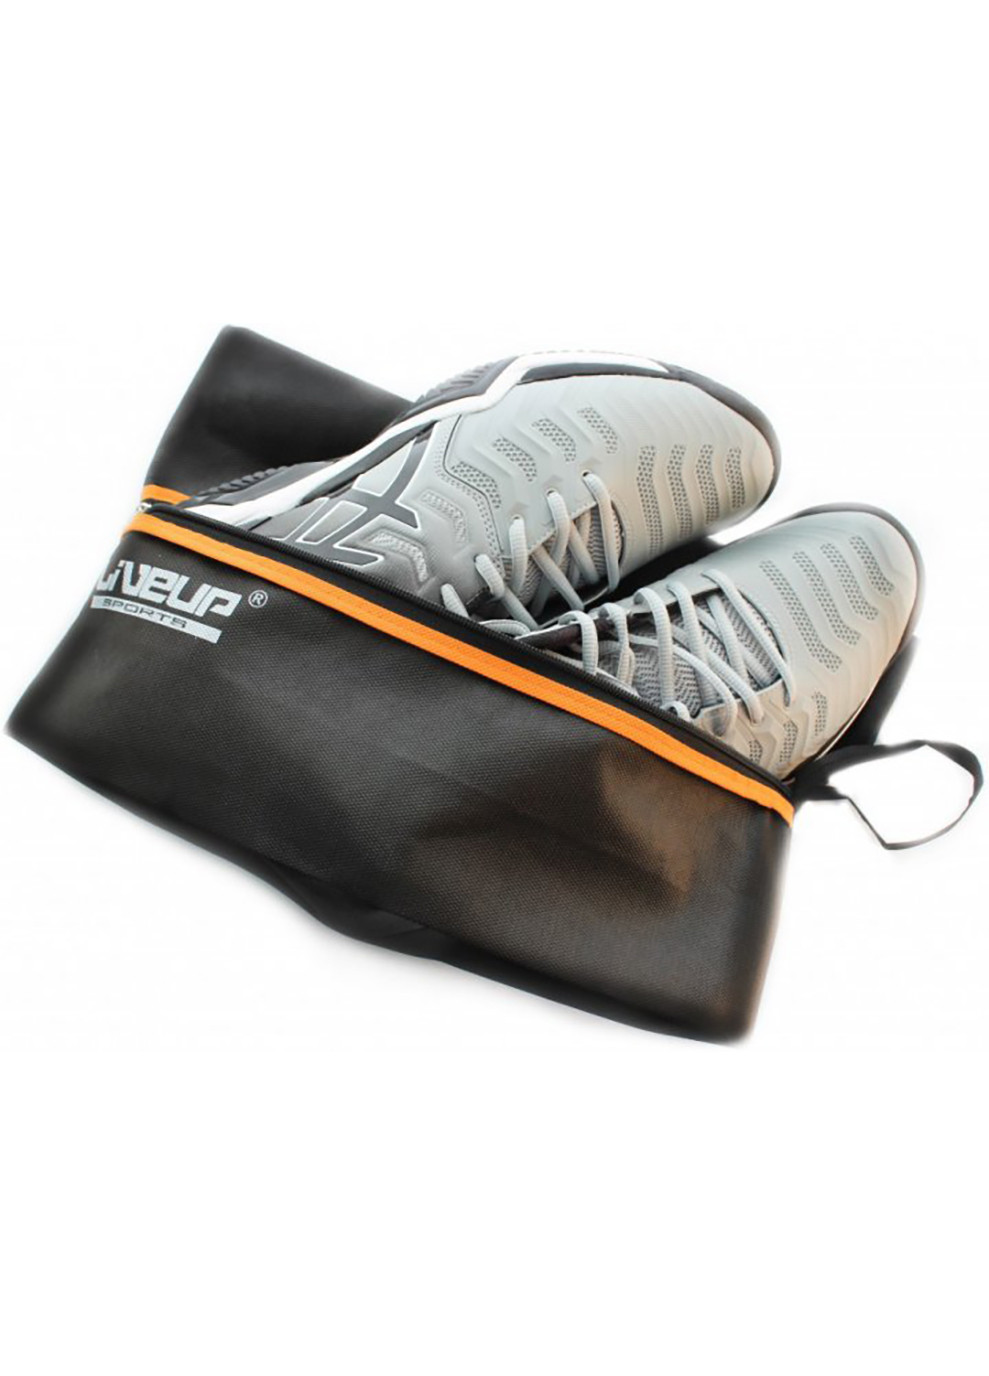 Сумка Shoe bag чорний S/M LSU2019-blk-S LiveUp (258146540)